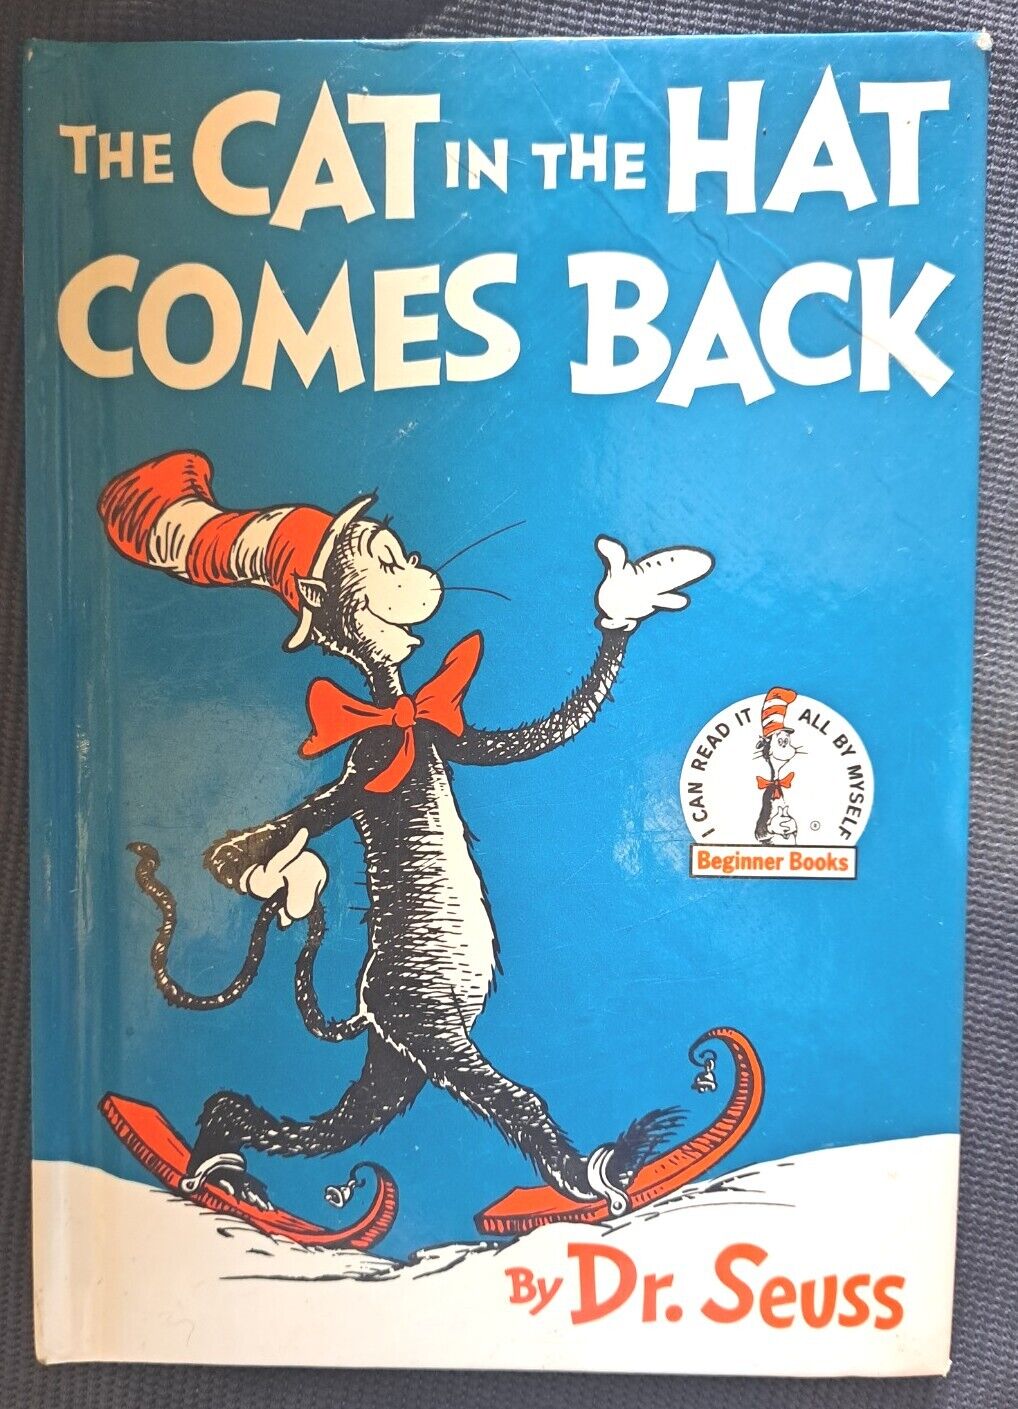 The Cat In The Hat Comes Back Vintage 1958 Dr. Seuss Beginner Books Random House